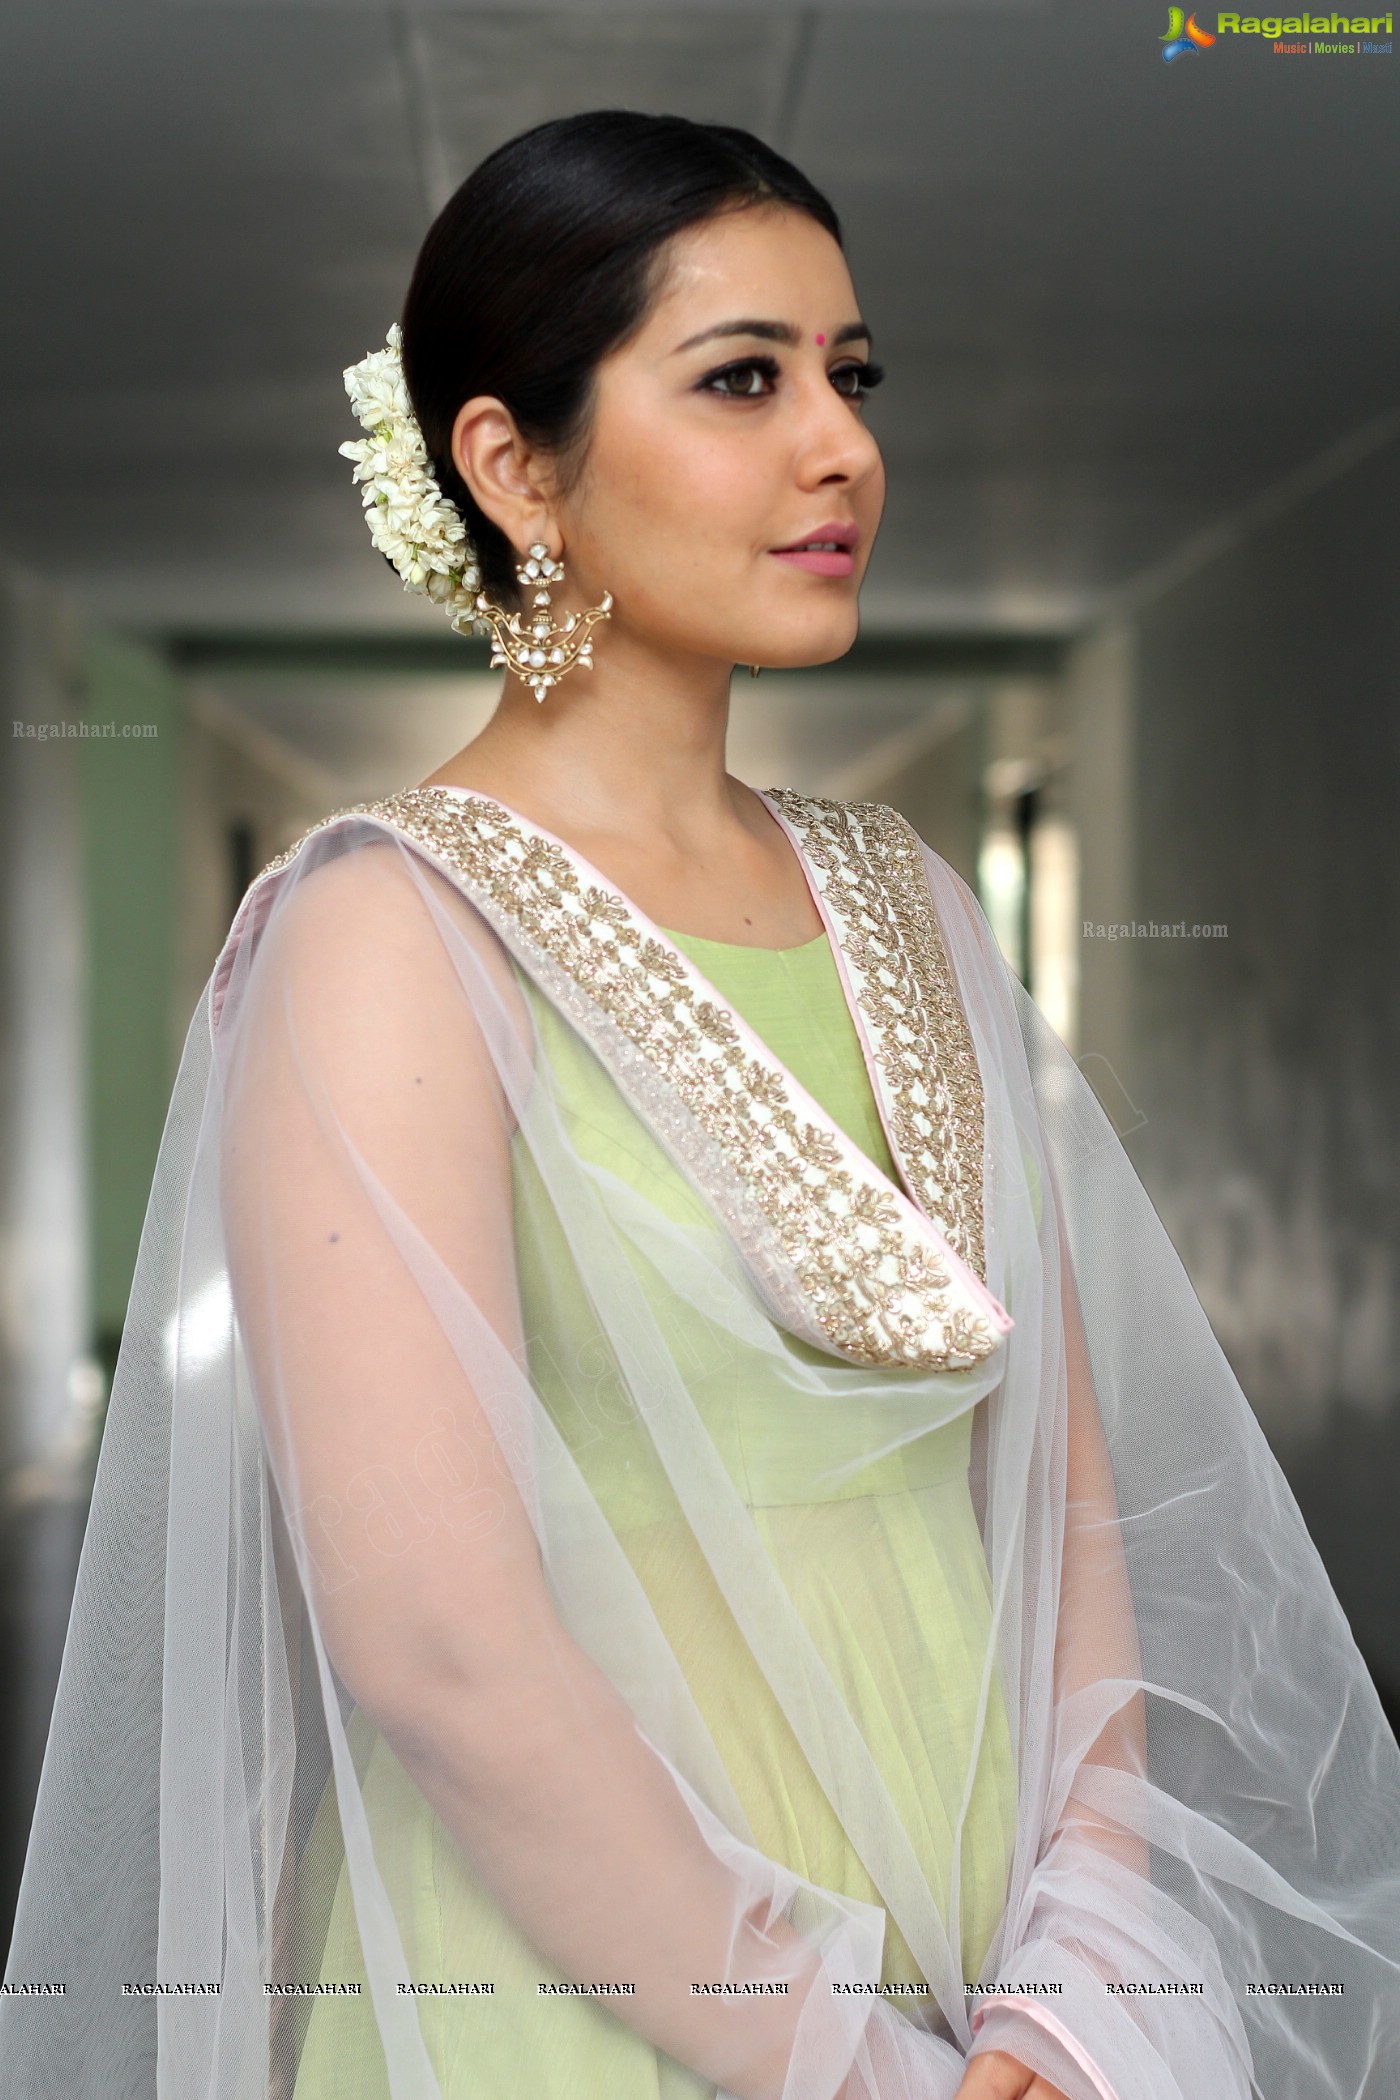 Actress Raashi Khanna in Indian Traditional Dress